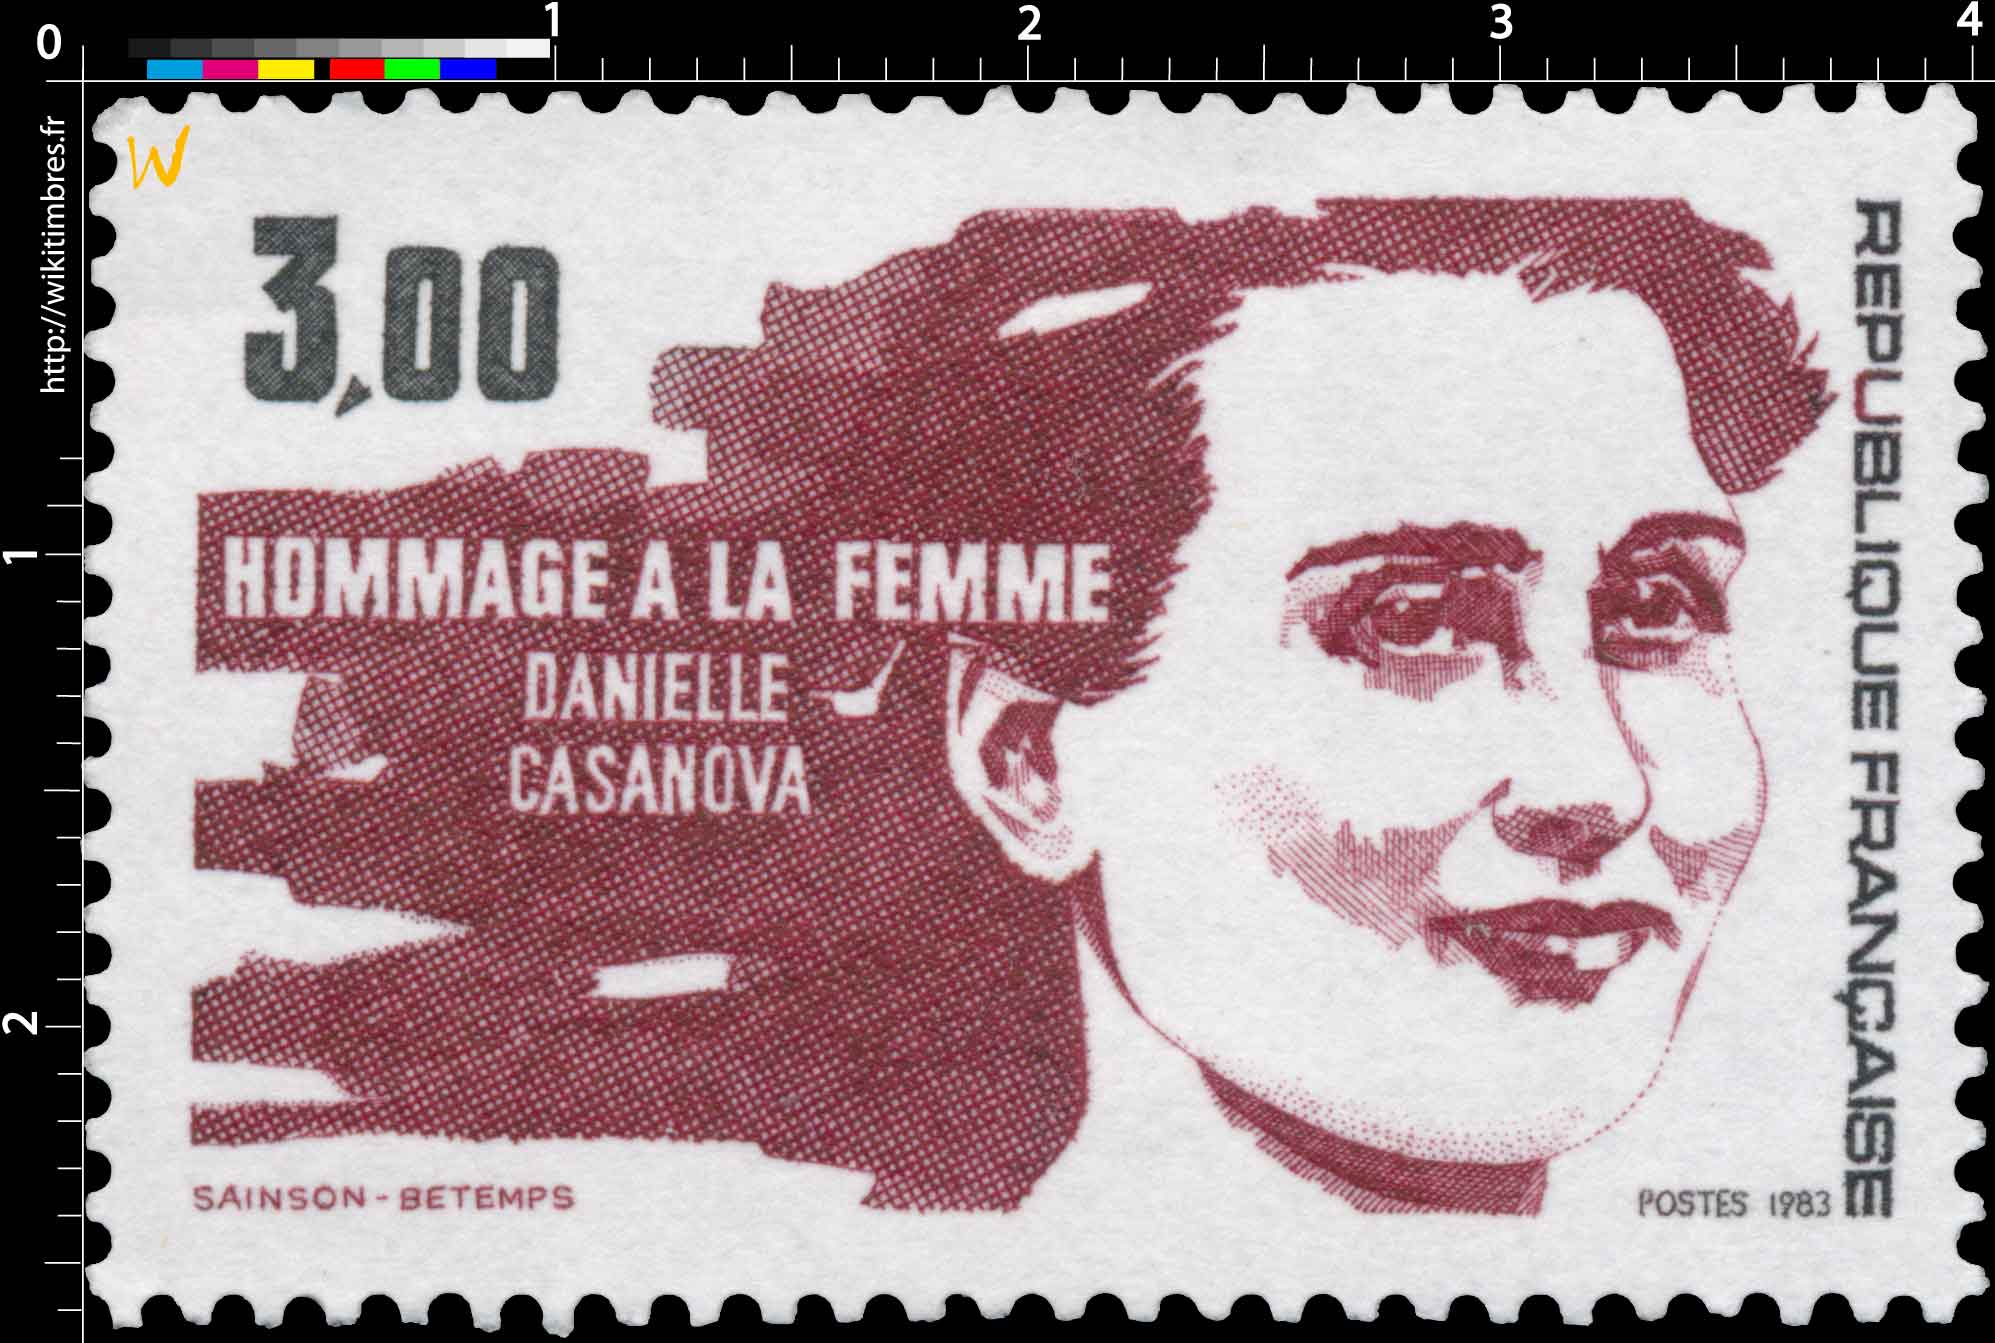 1983 HOMMAGE A LA FEMME DANIELLE CASANOVA